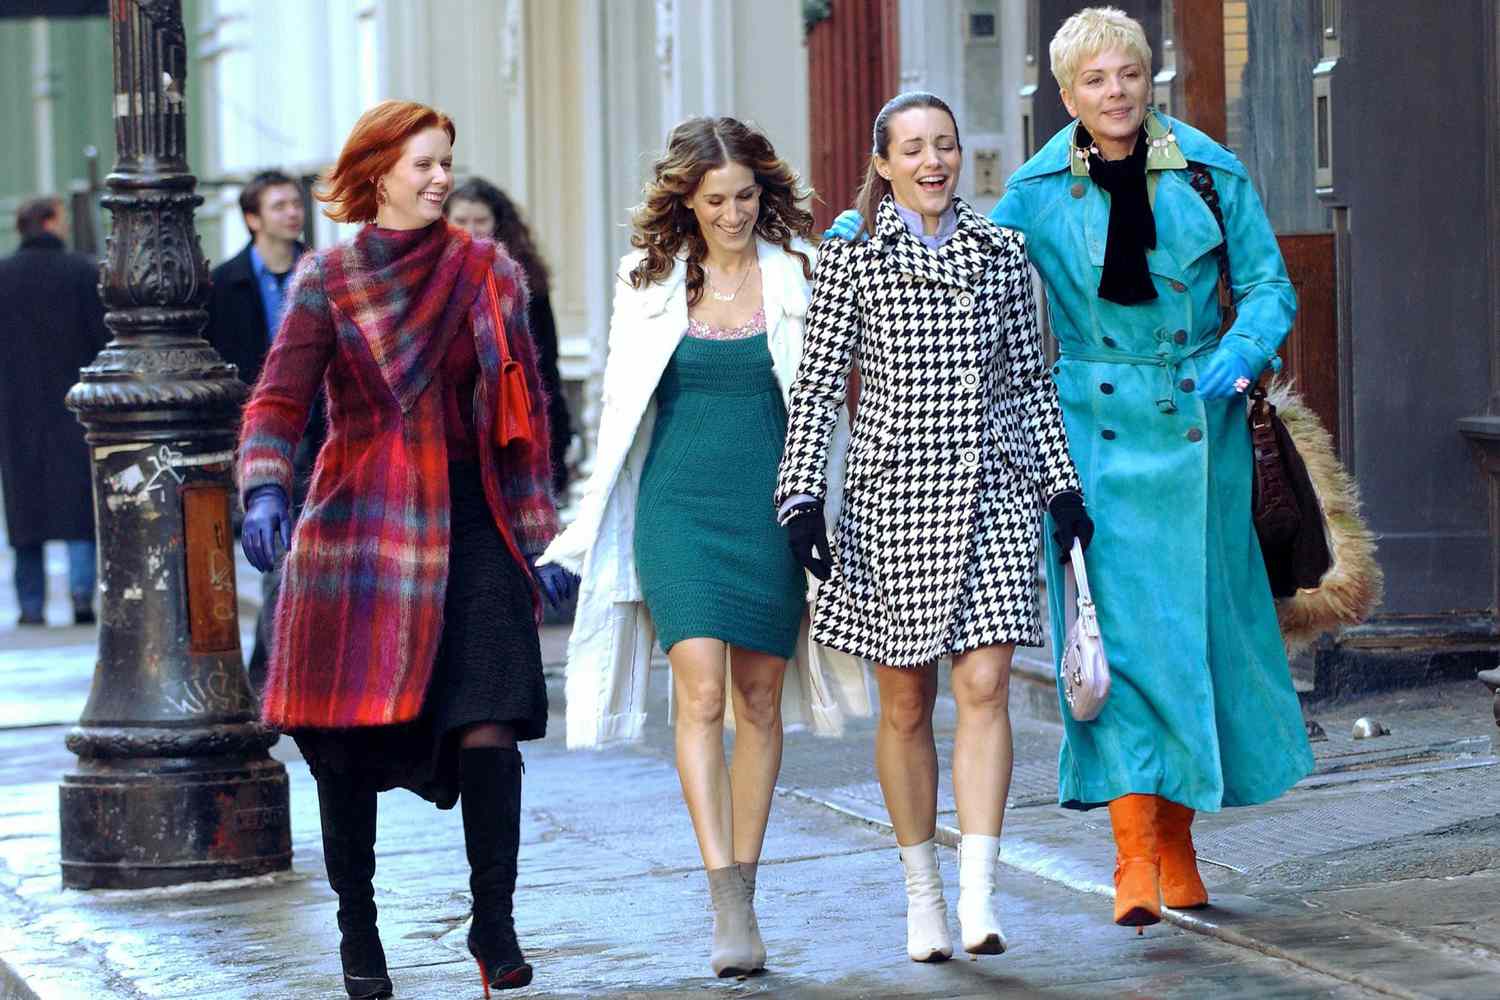 Cynthia Nixon, Sarah Jessica Parker, Kristin Davis, and Kim Cattrall Filming Sex and the City on February 2, 2004